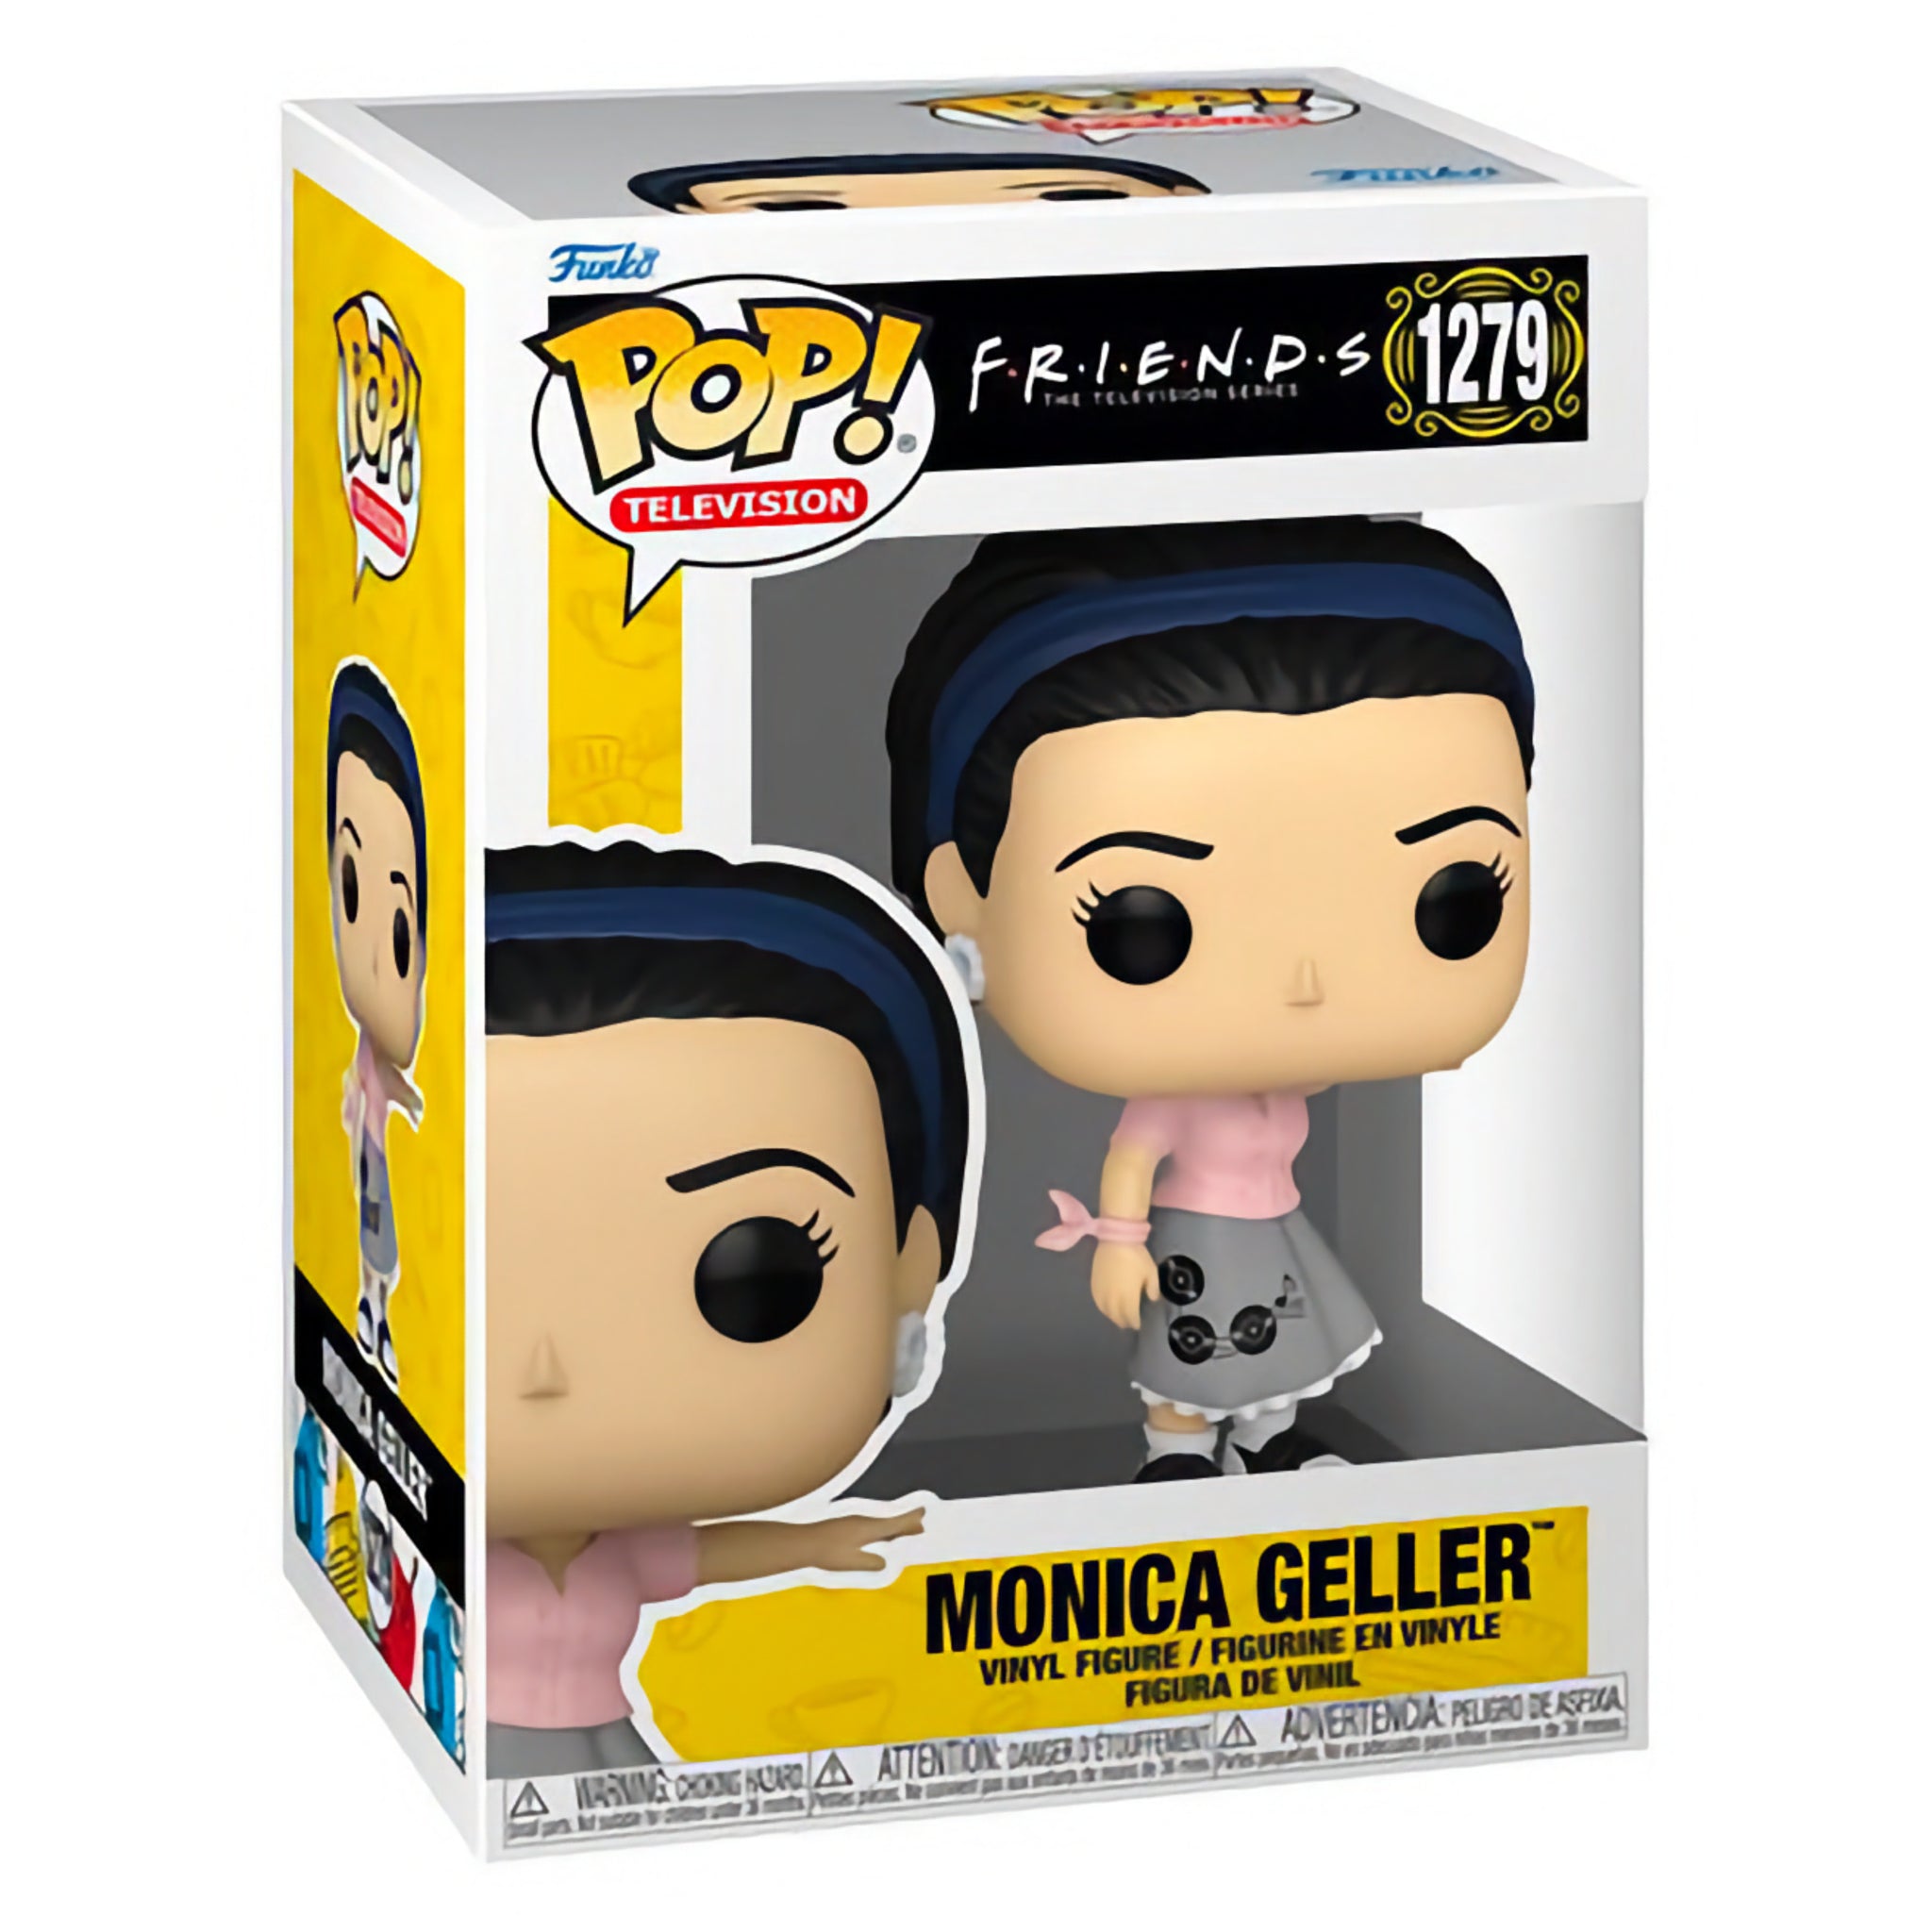 Monica Geller Funko Pop!